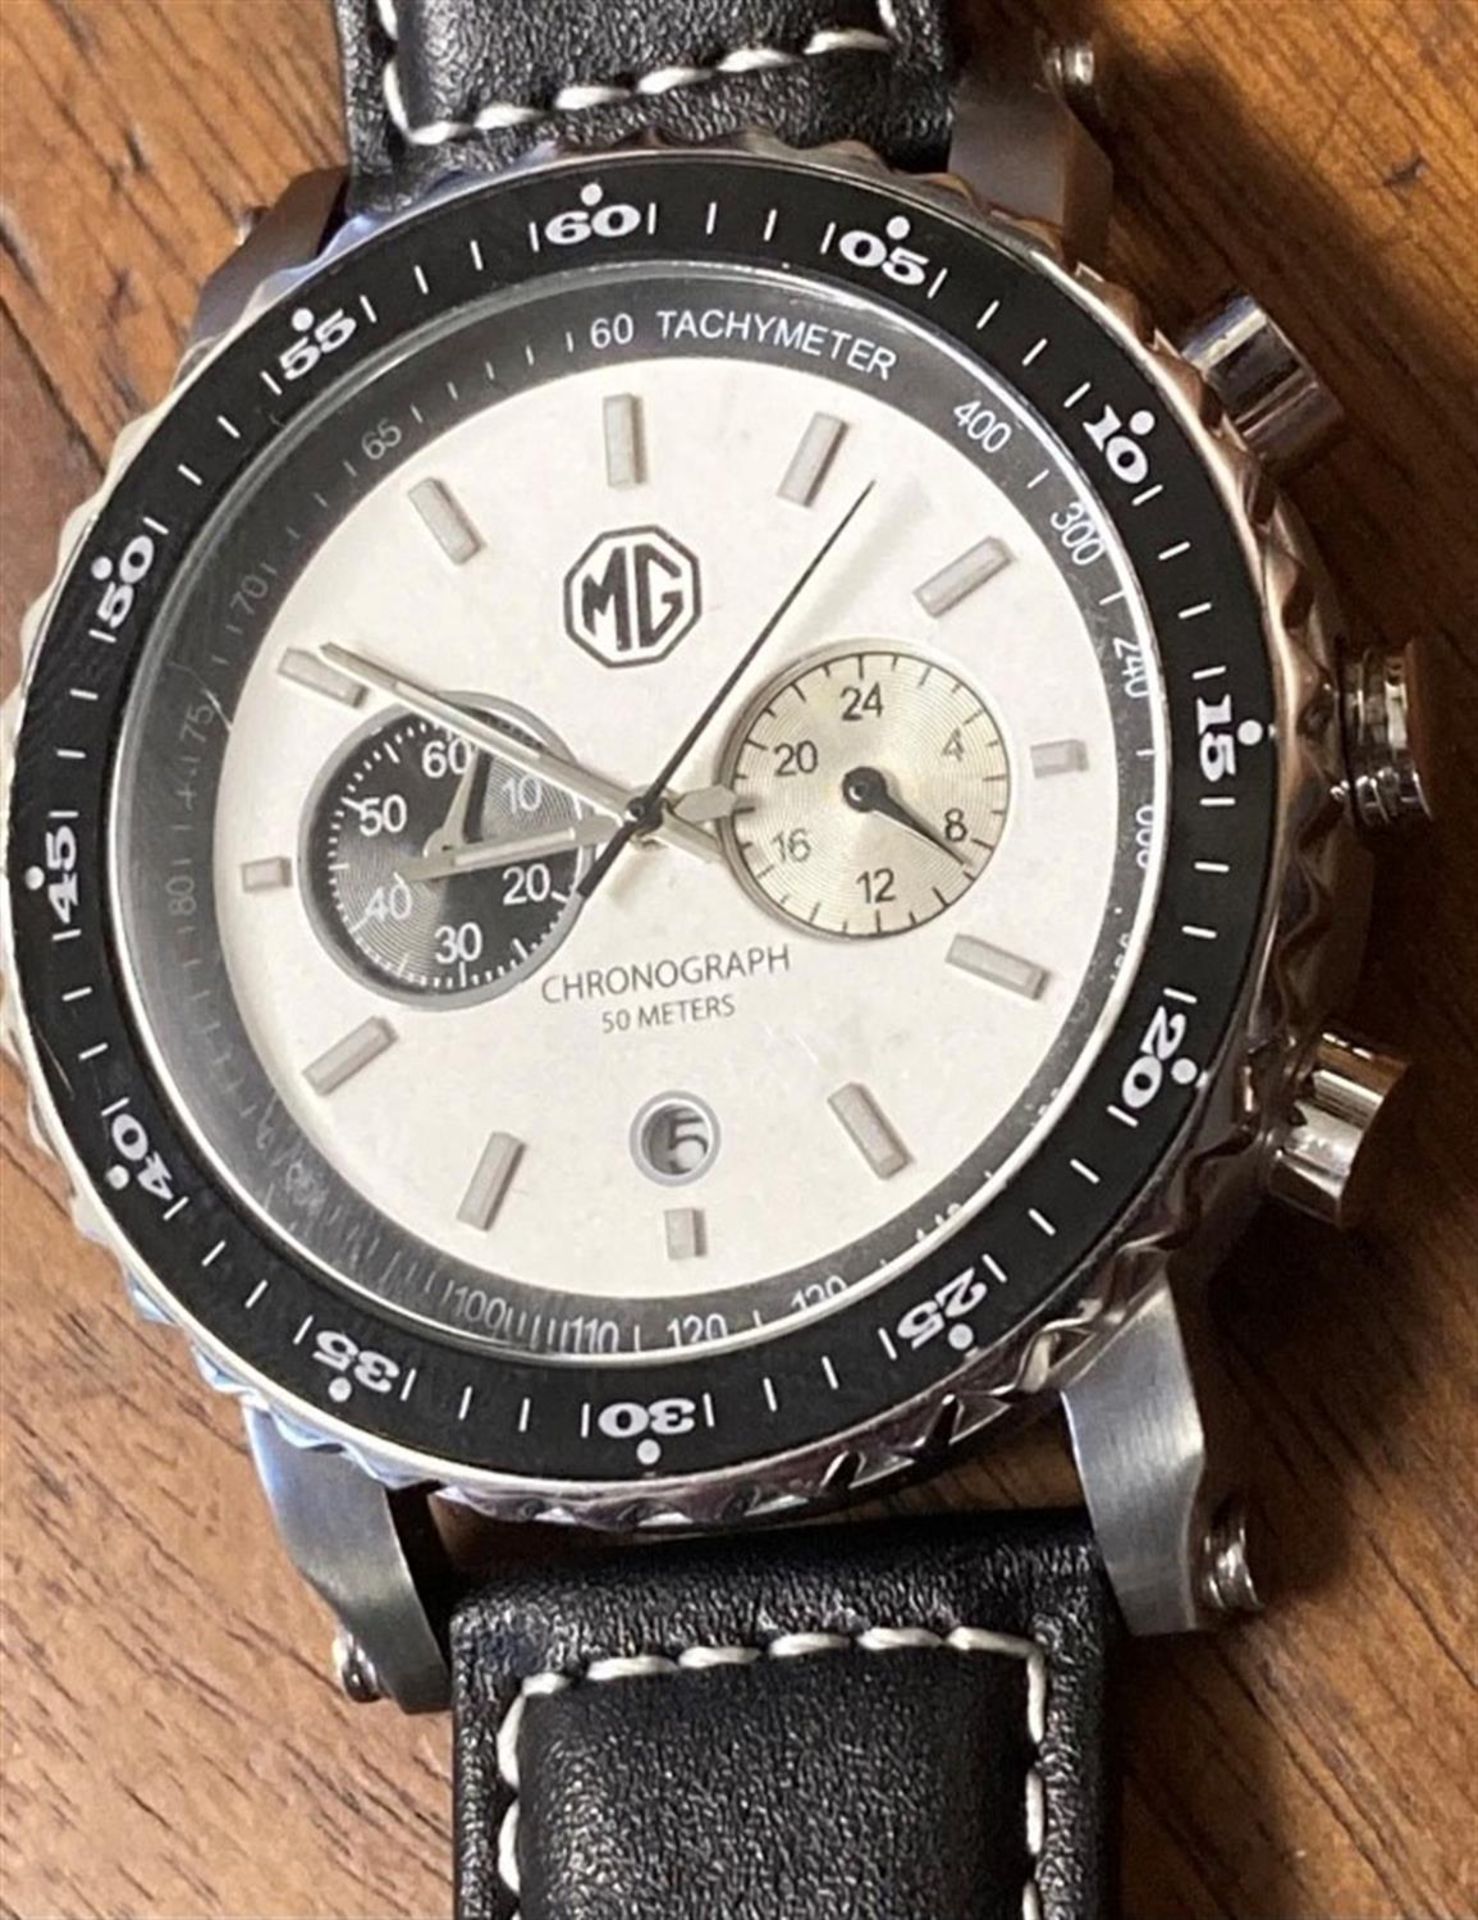 An MG Themed Chronograph Gentleman's Wristwatch - Image 3 of 8